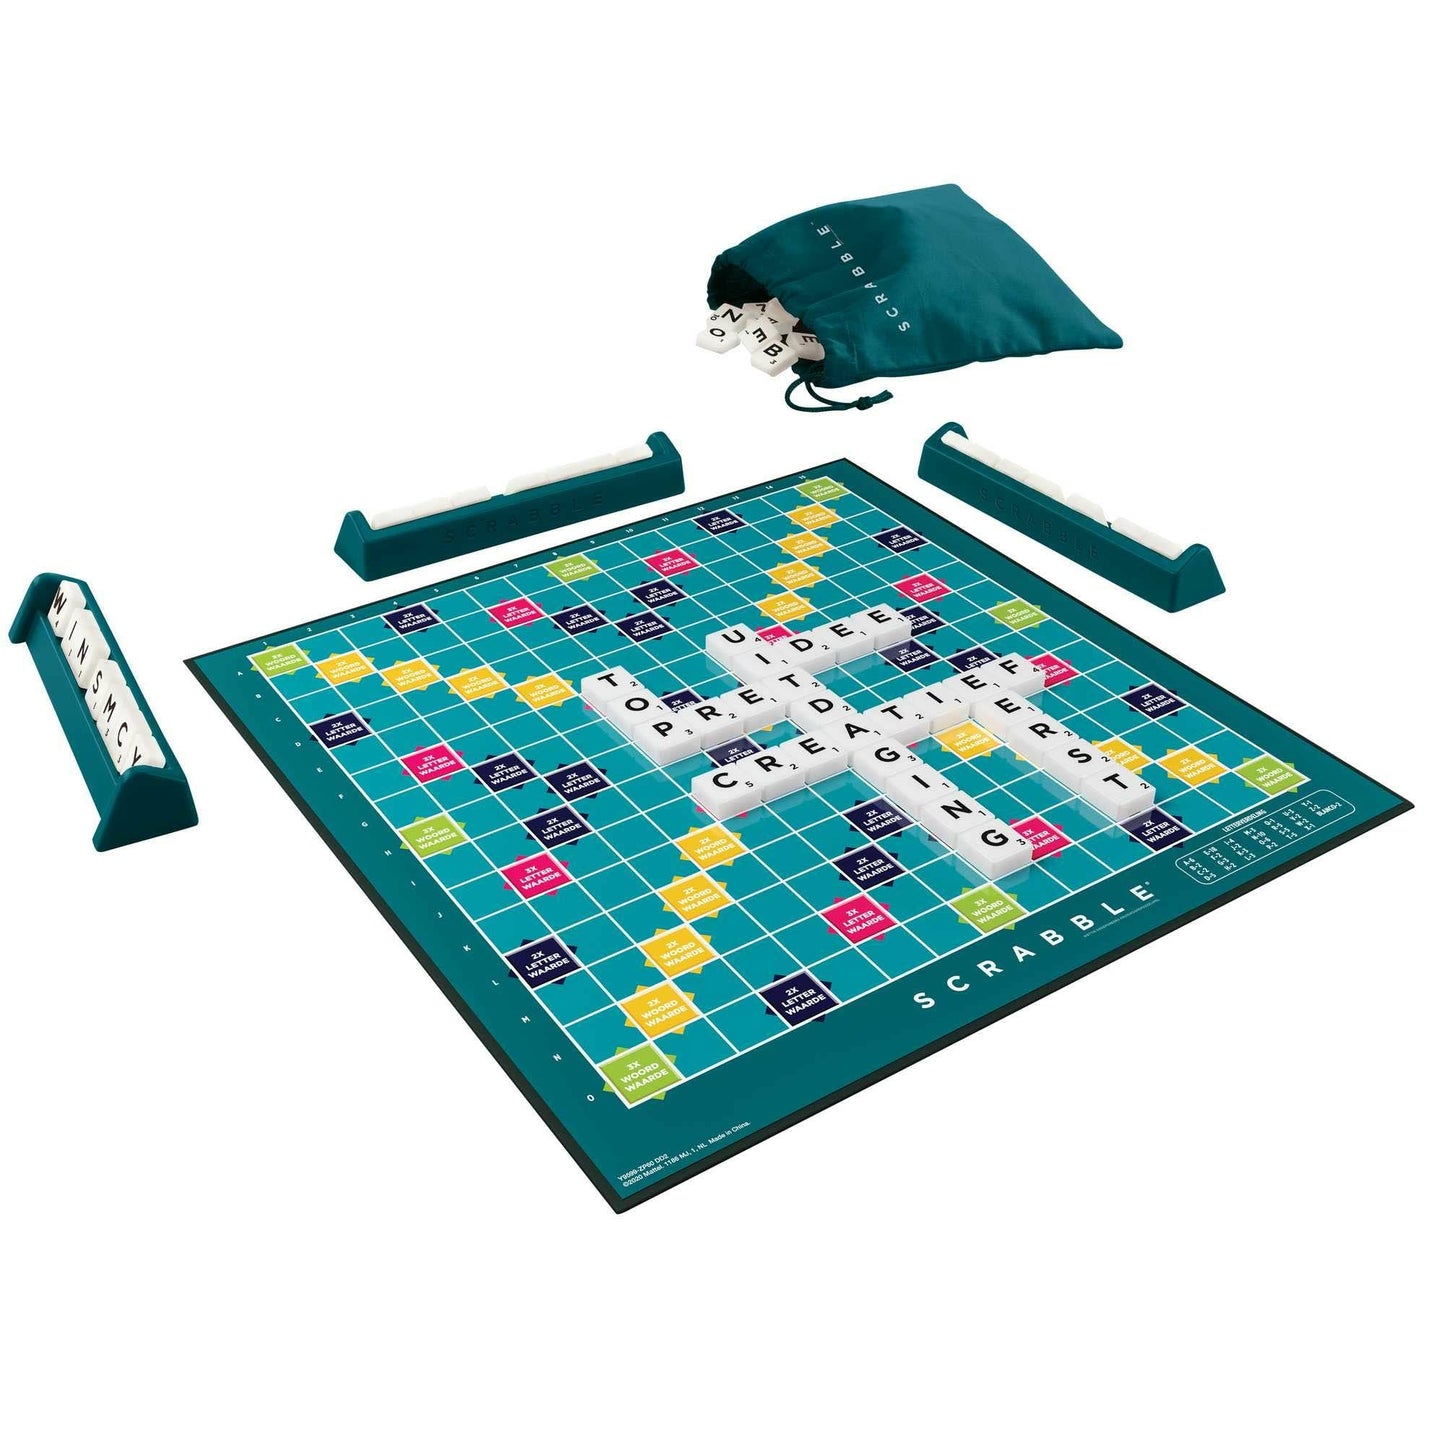 Scrabble Original [NL]